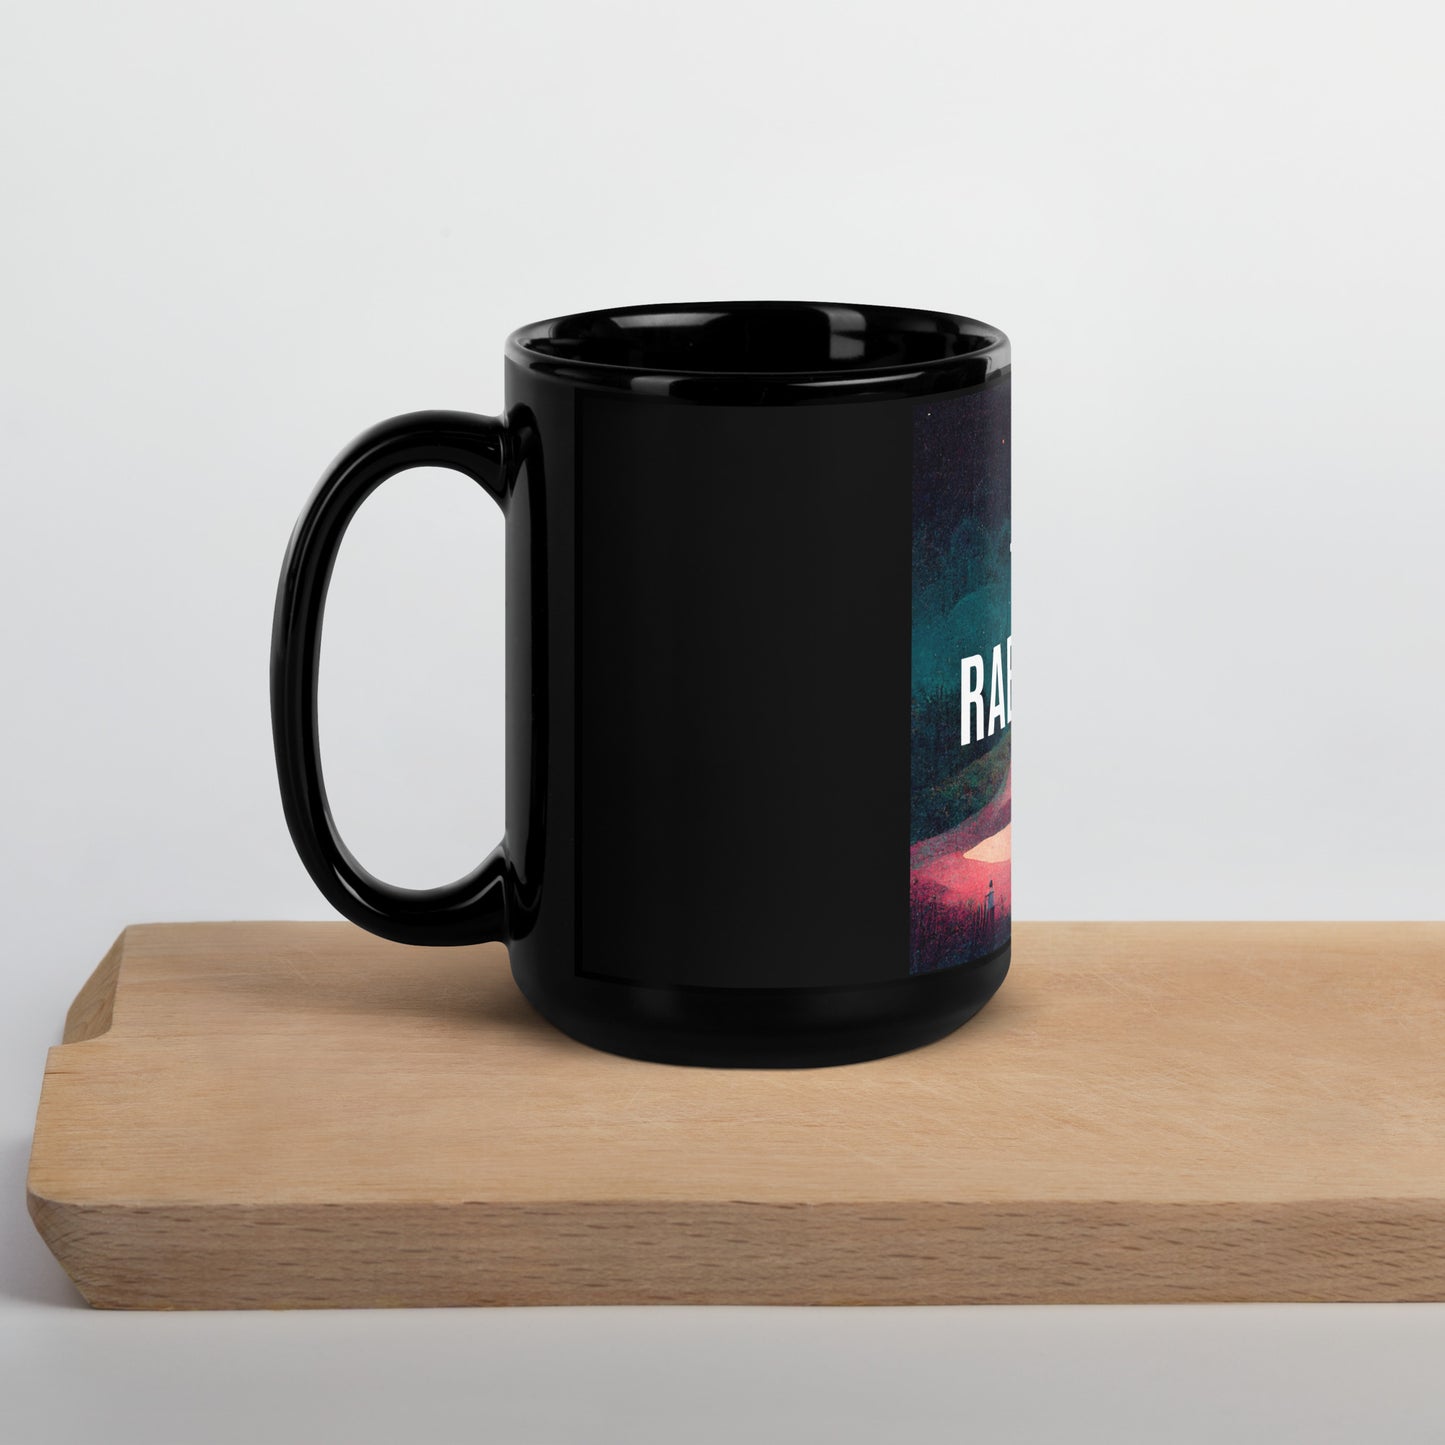 The UFO Rabbit Hole Black Glossy Mug